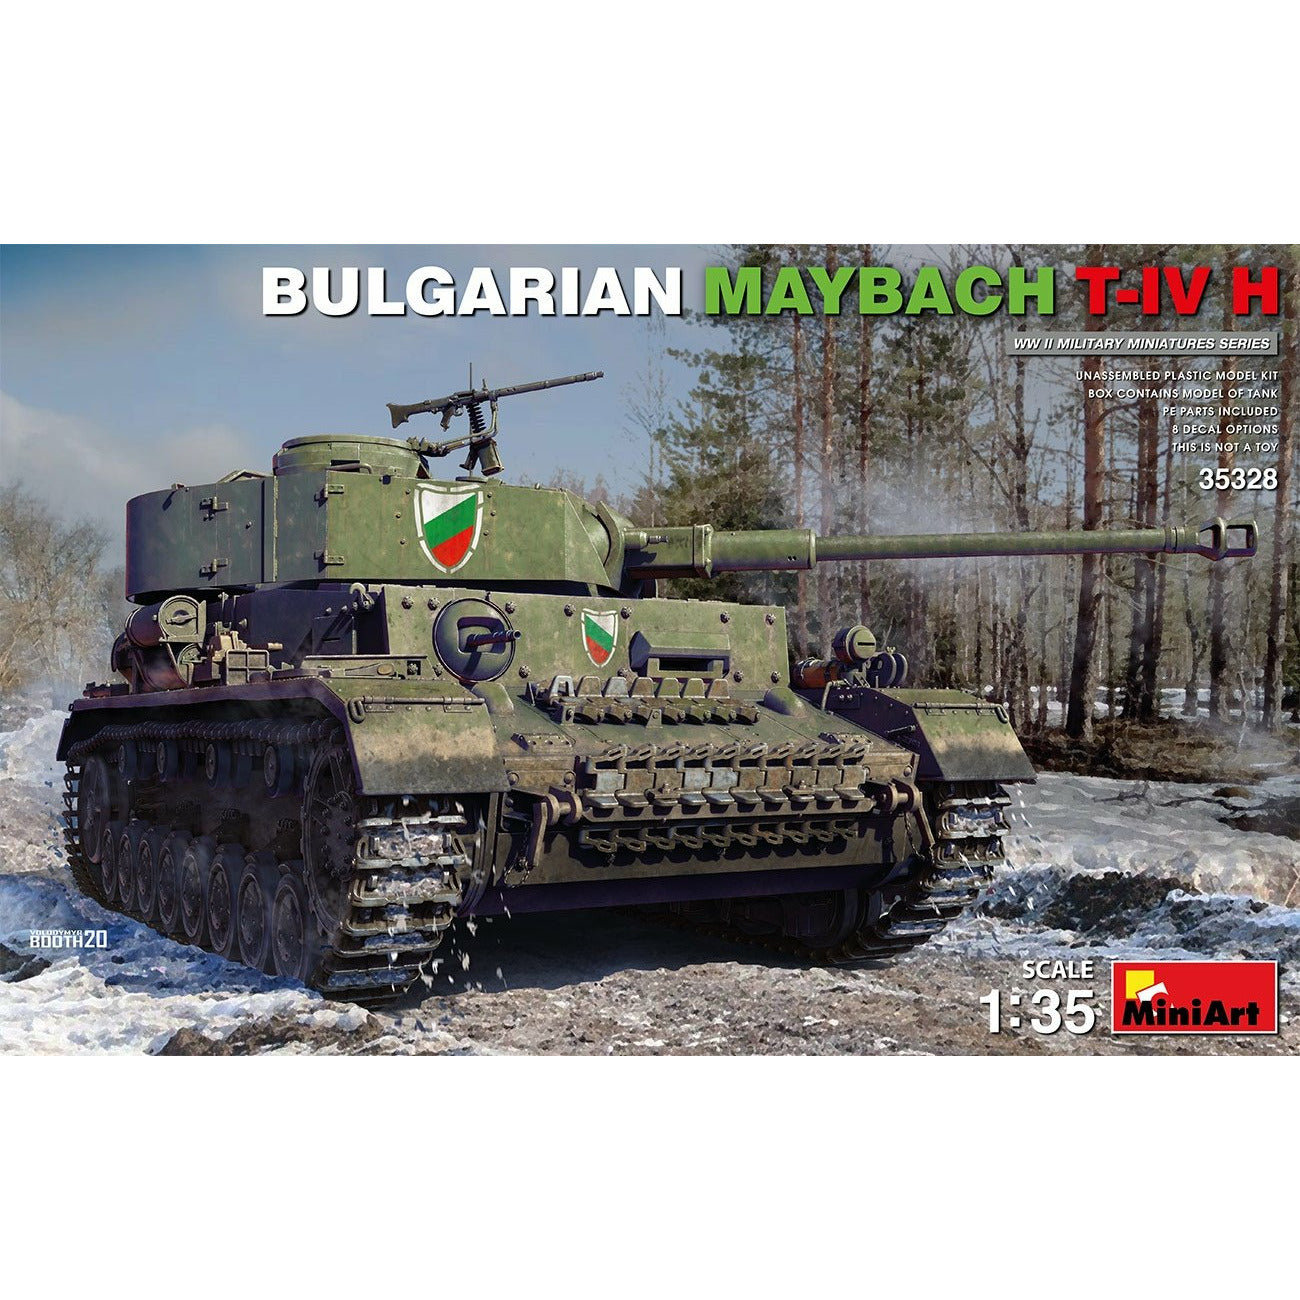 Bulgarian Maybach T-IV H 1/35 #35328 by MiniArt